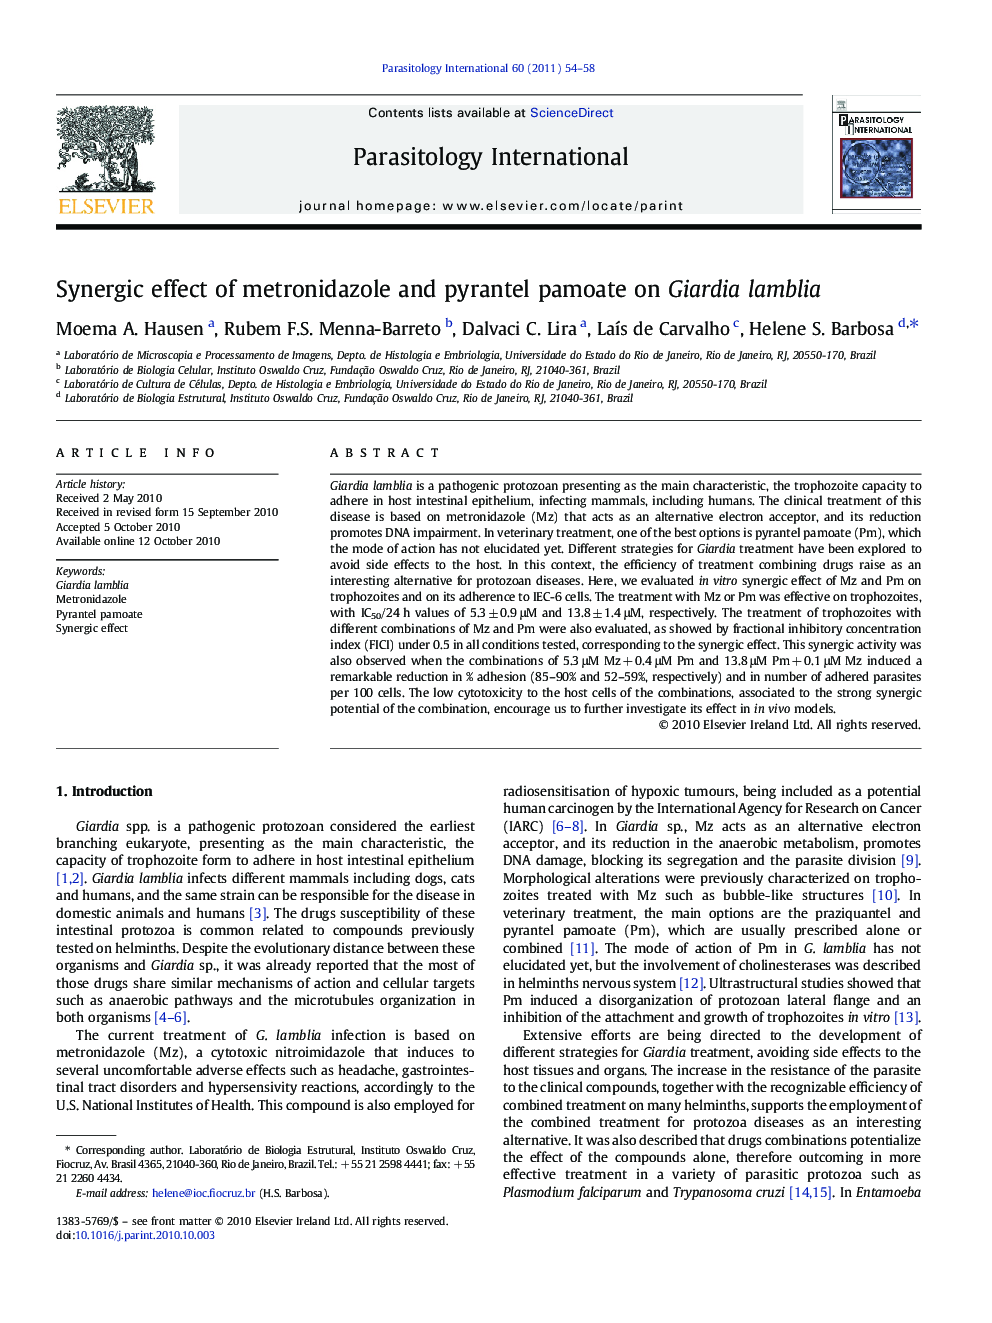 Synergic effect of metronidazole and pyrantel pamoate on Giardia lamblia